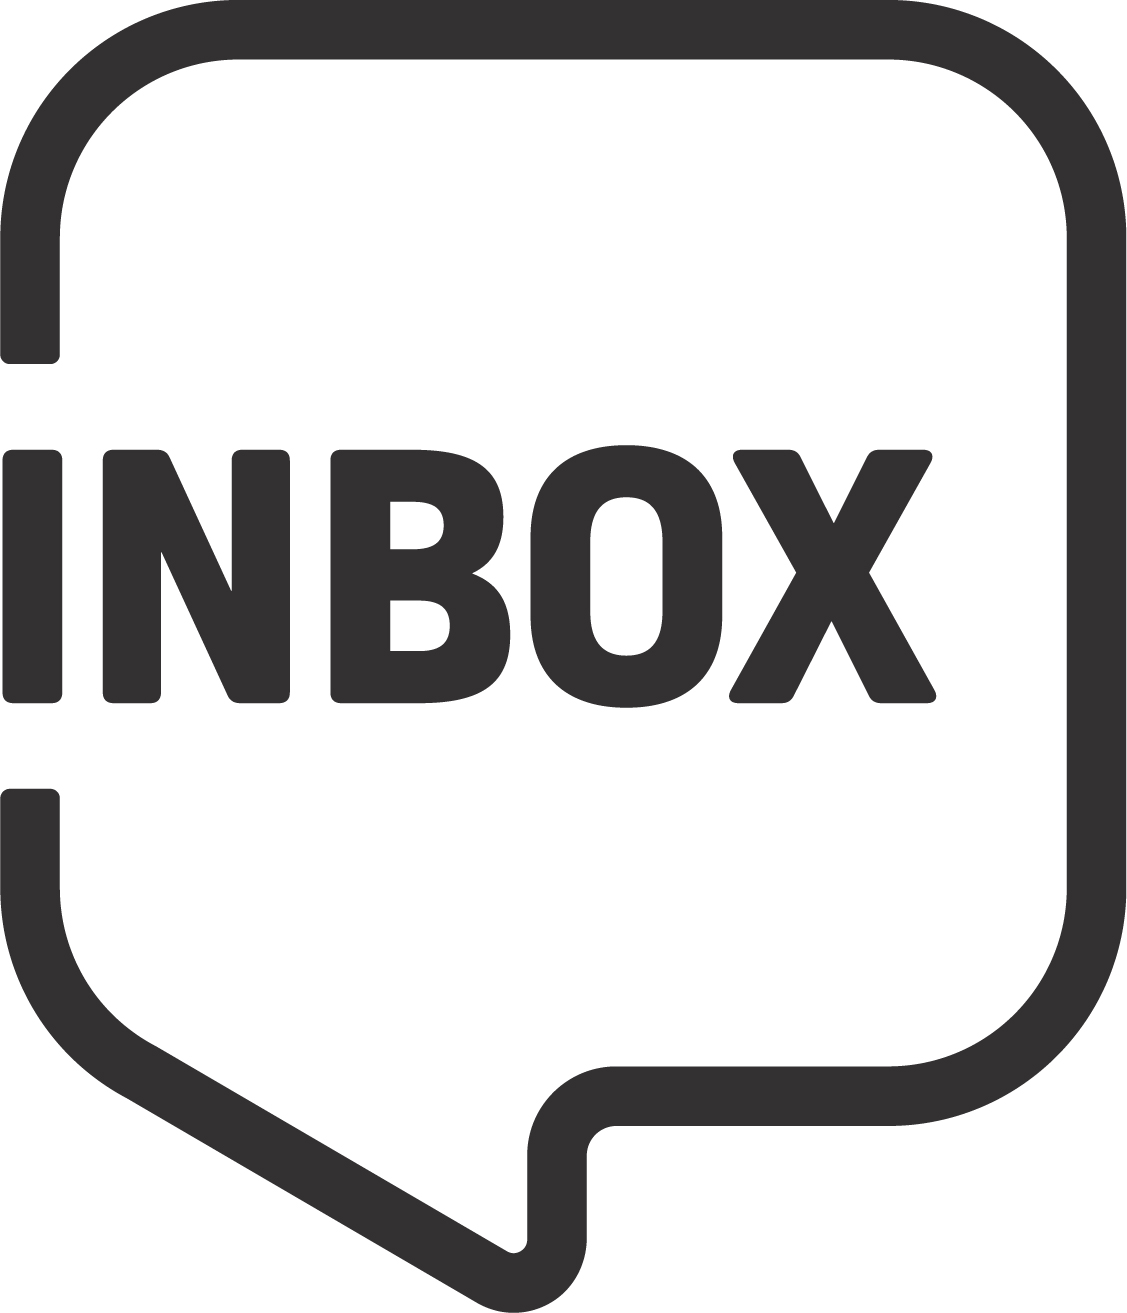 InBox logo